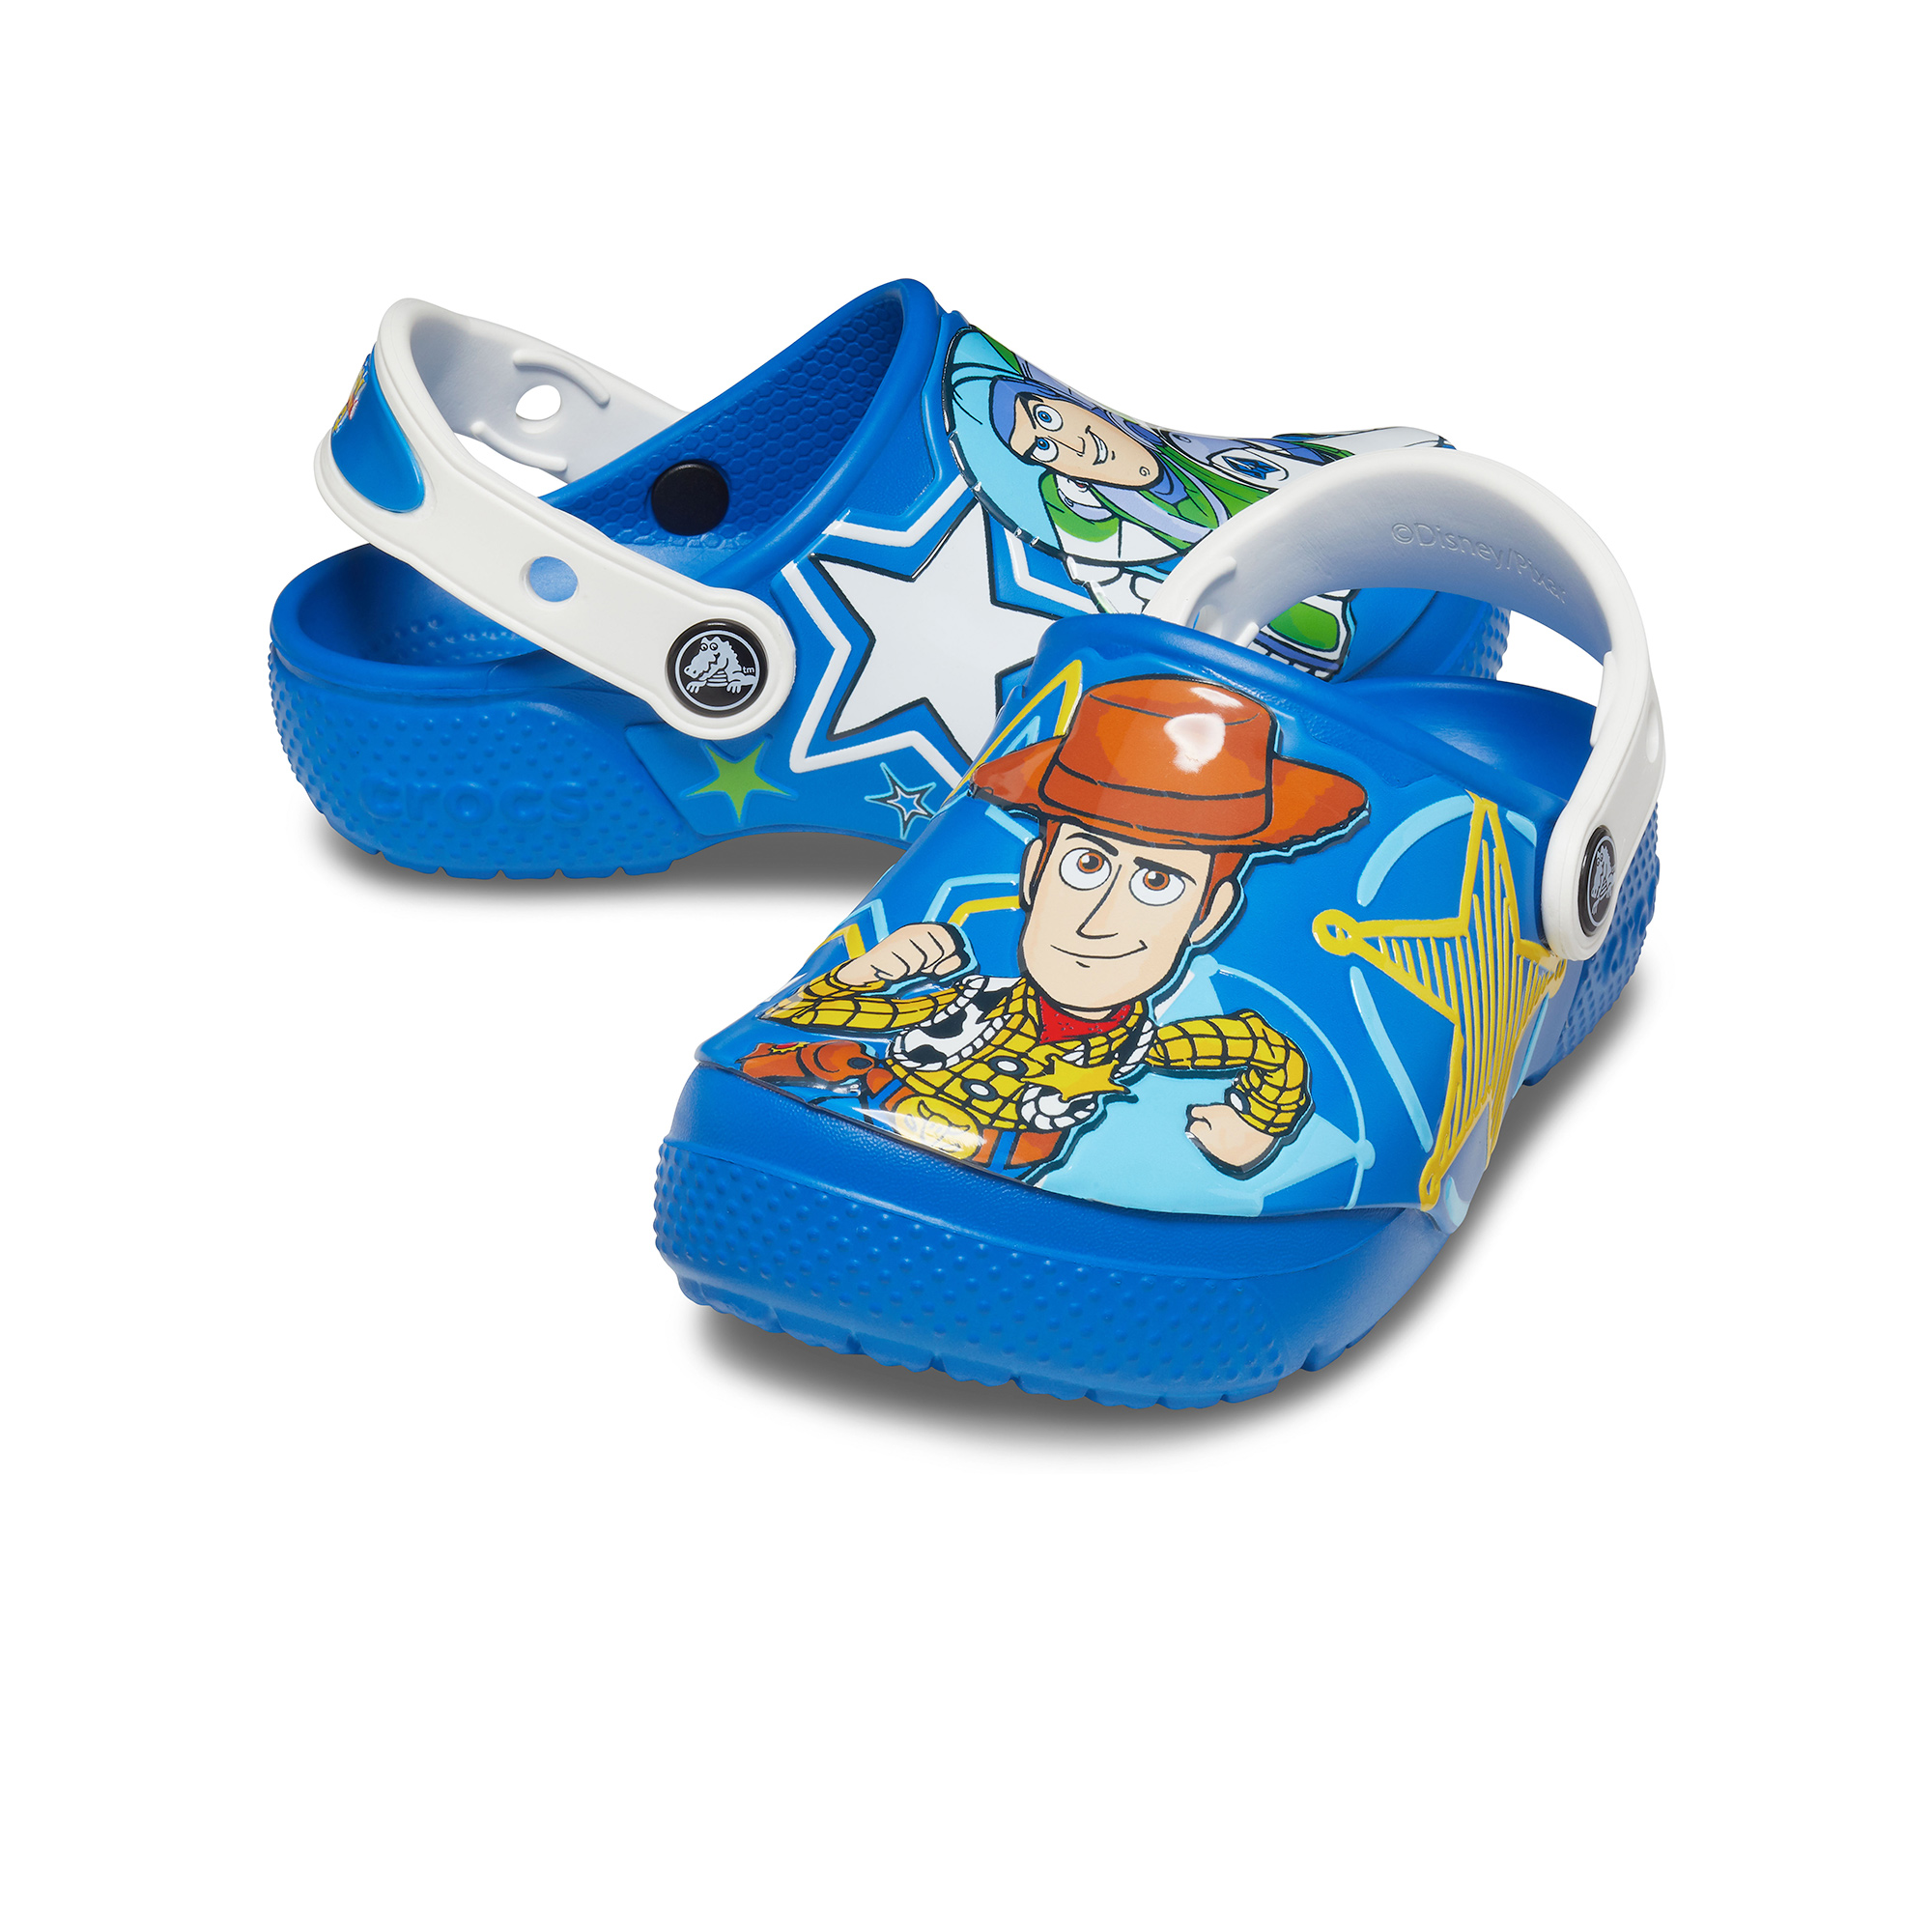 Giày lười clog trẻ em Crocs Disney Pixar Toy Story Bright Cobalt - 207081 - 4JL